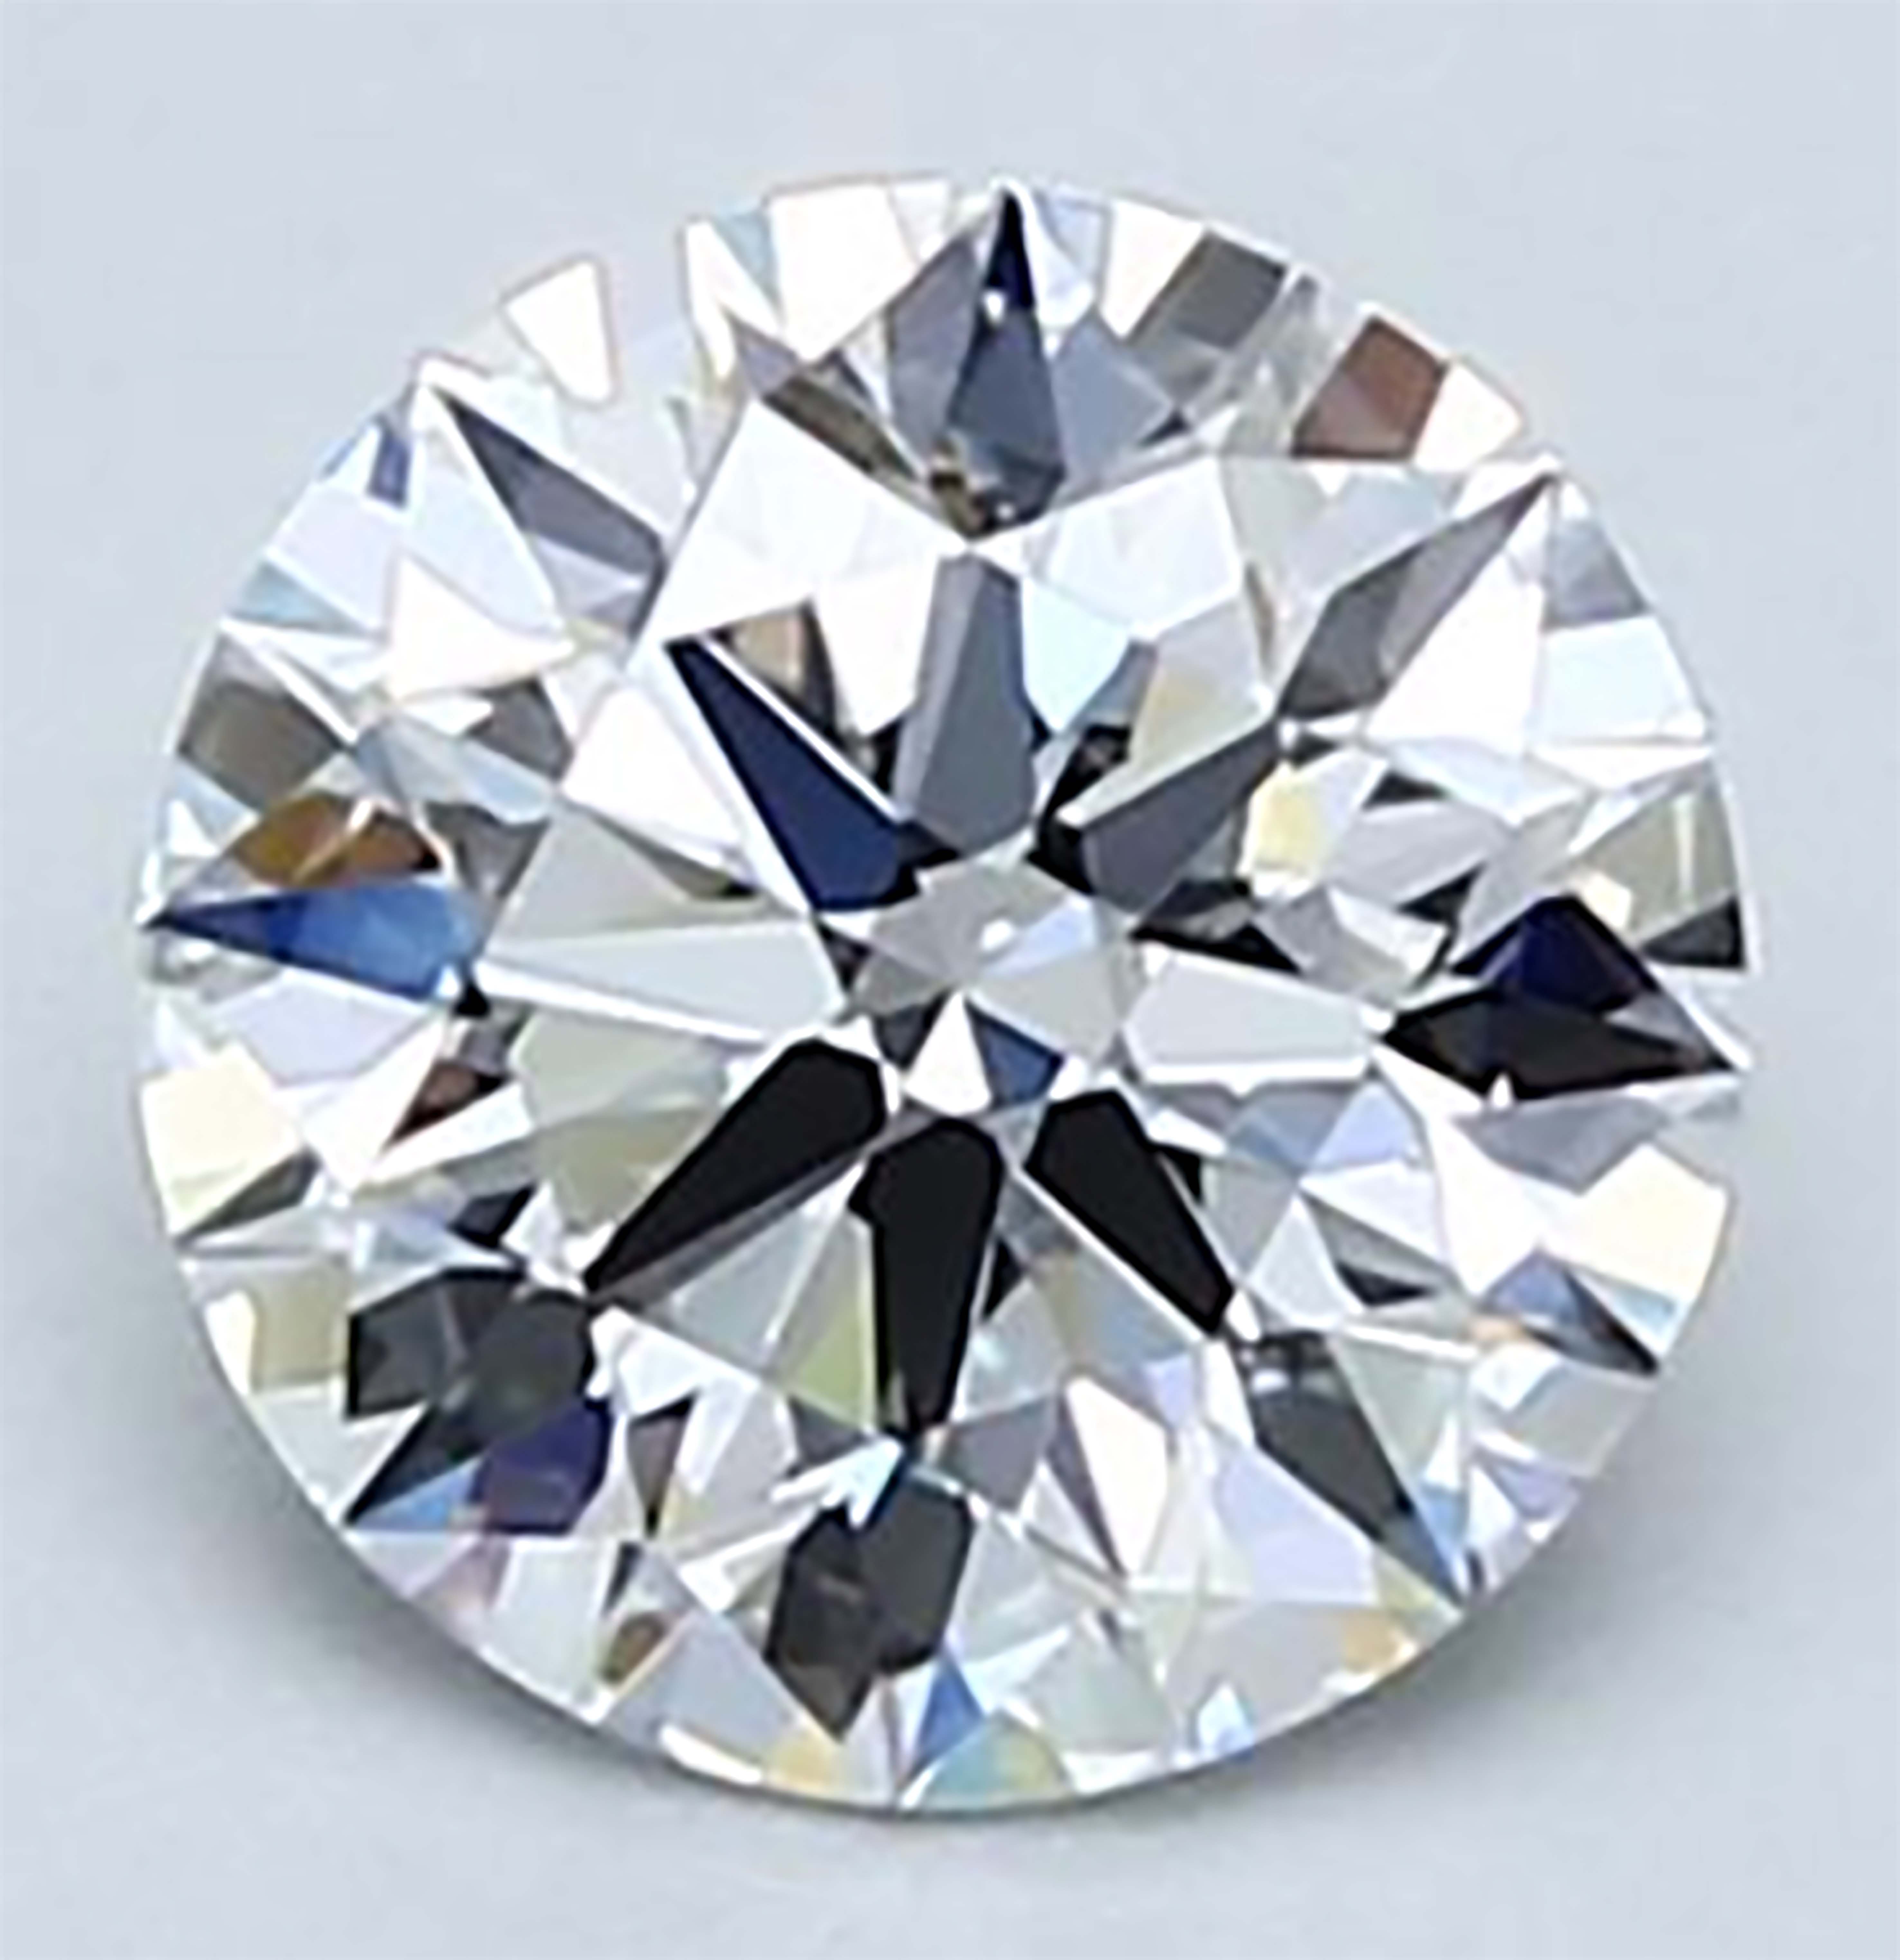 0.71 Carat, GIA Certified, Natural IF Diamond - Image 5 of 5